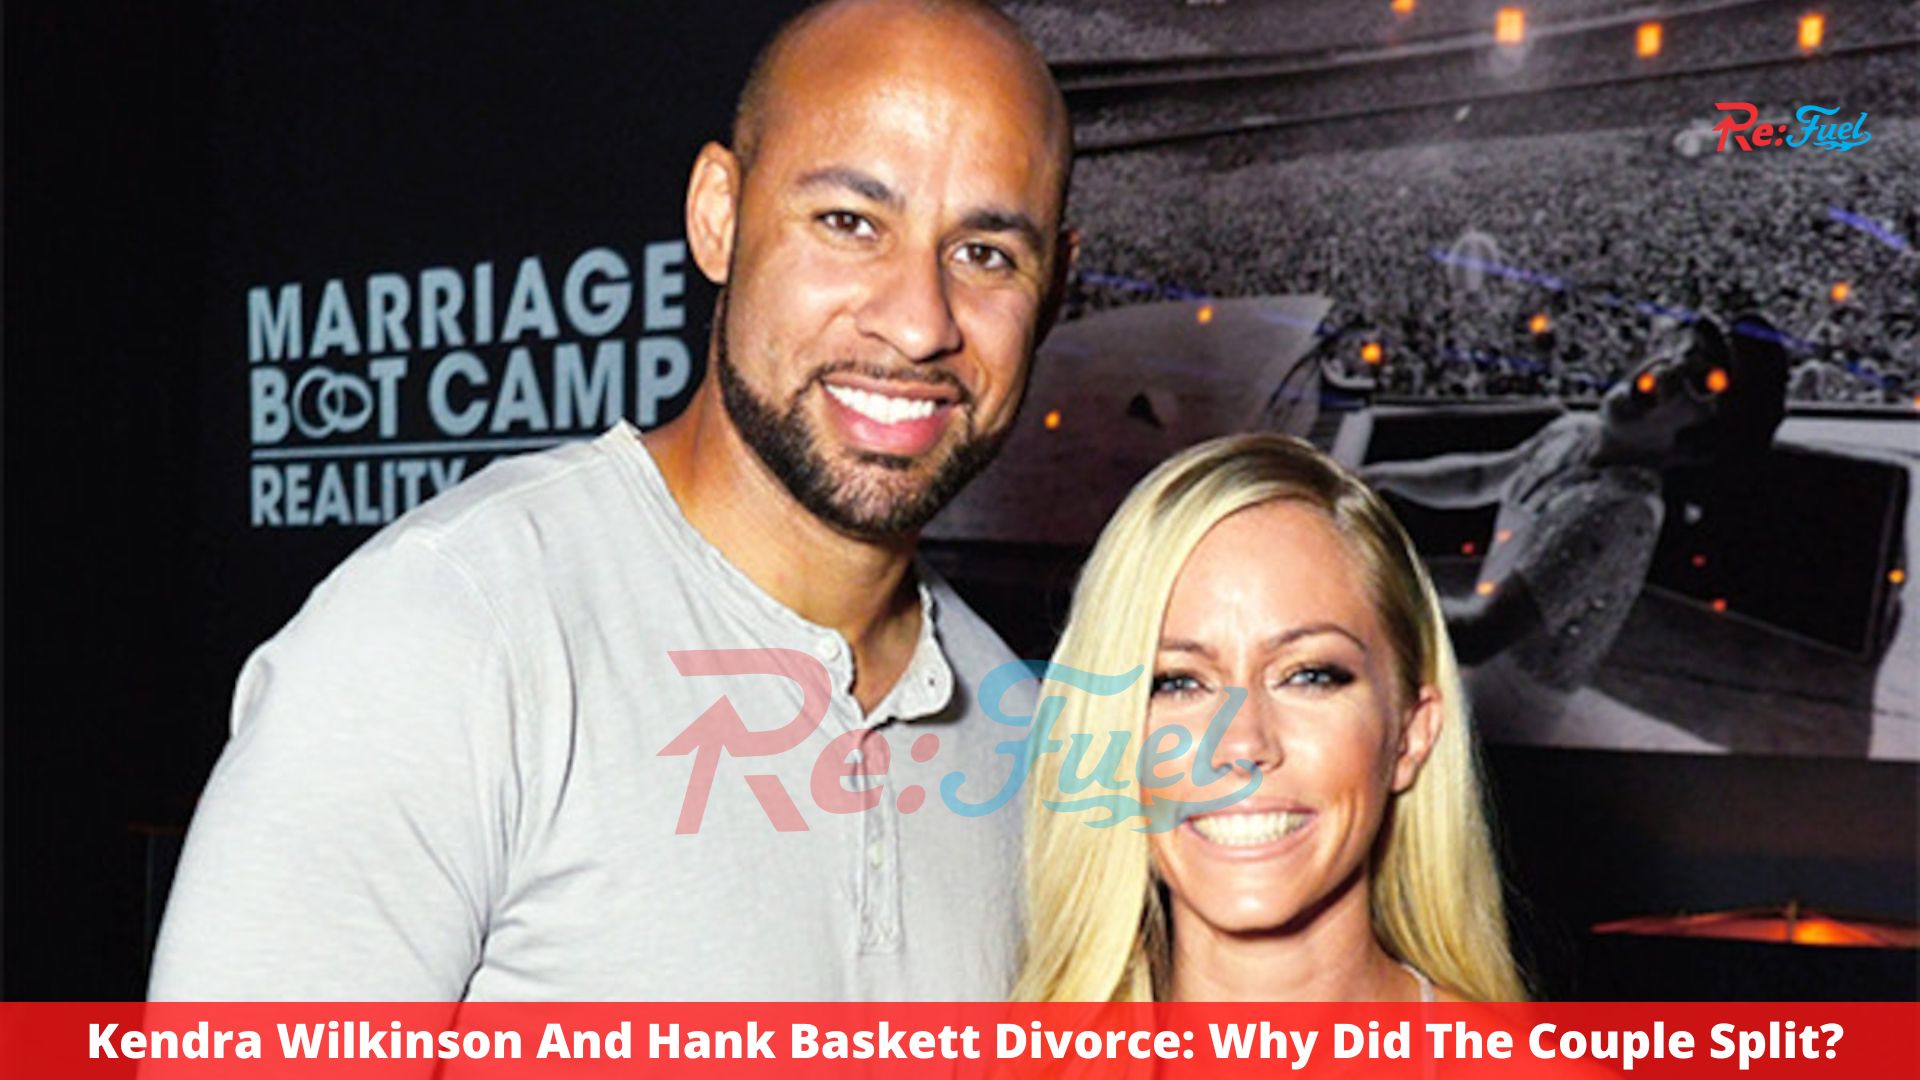 Kendra Wilkinson And Hank Baskett Divorce: Why Did The Couple Split?